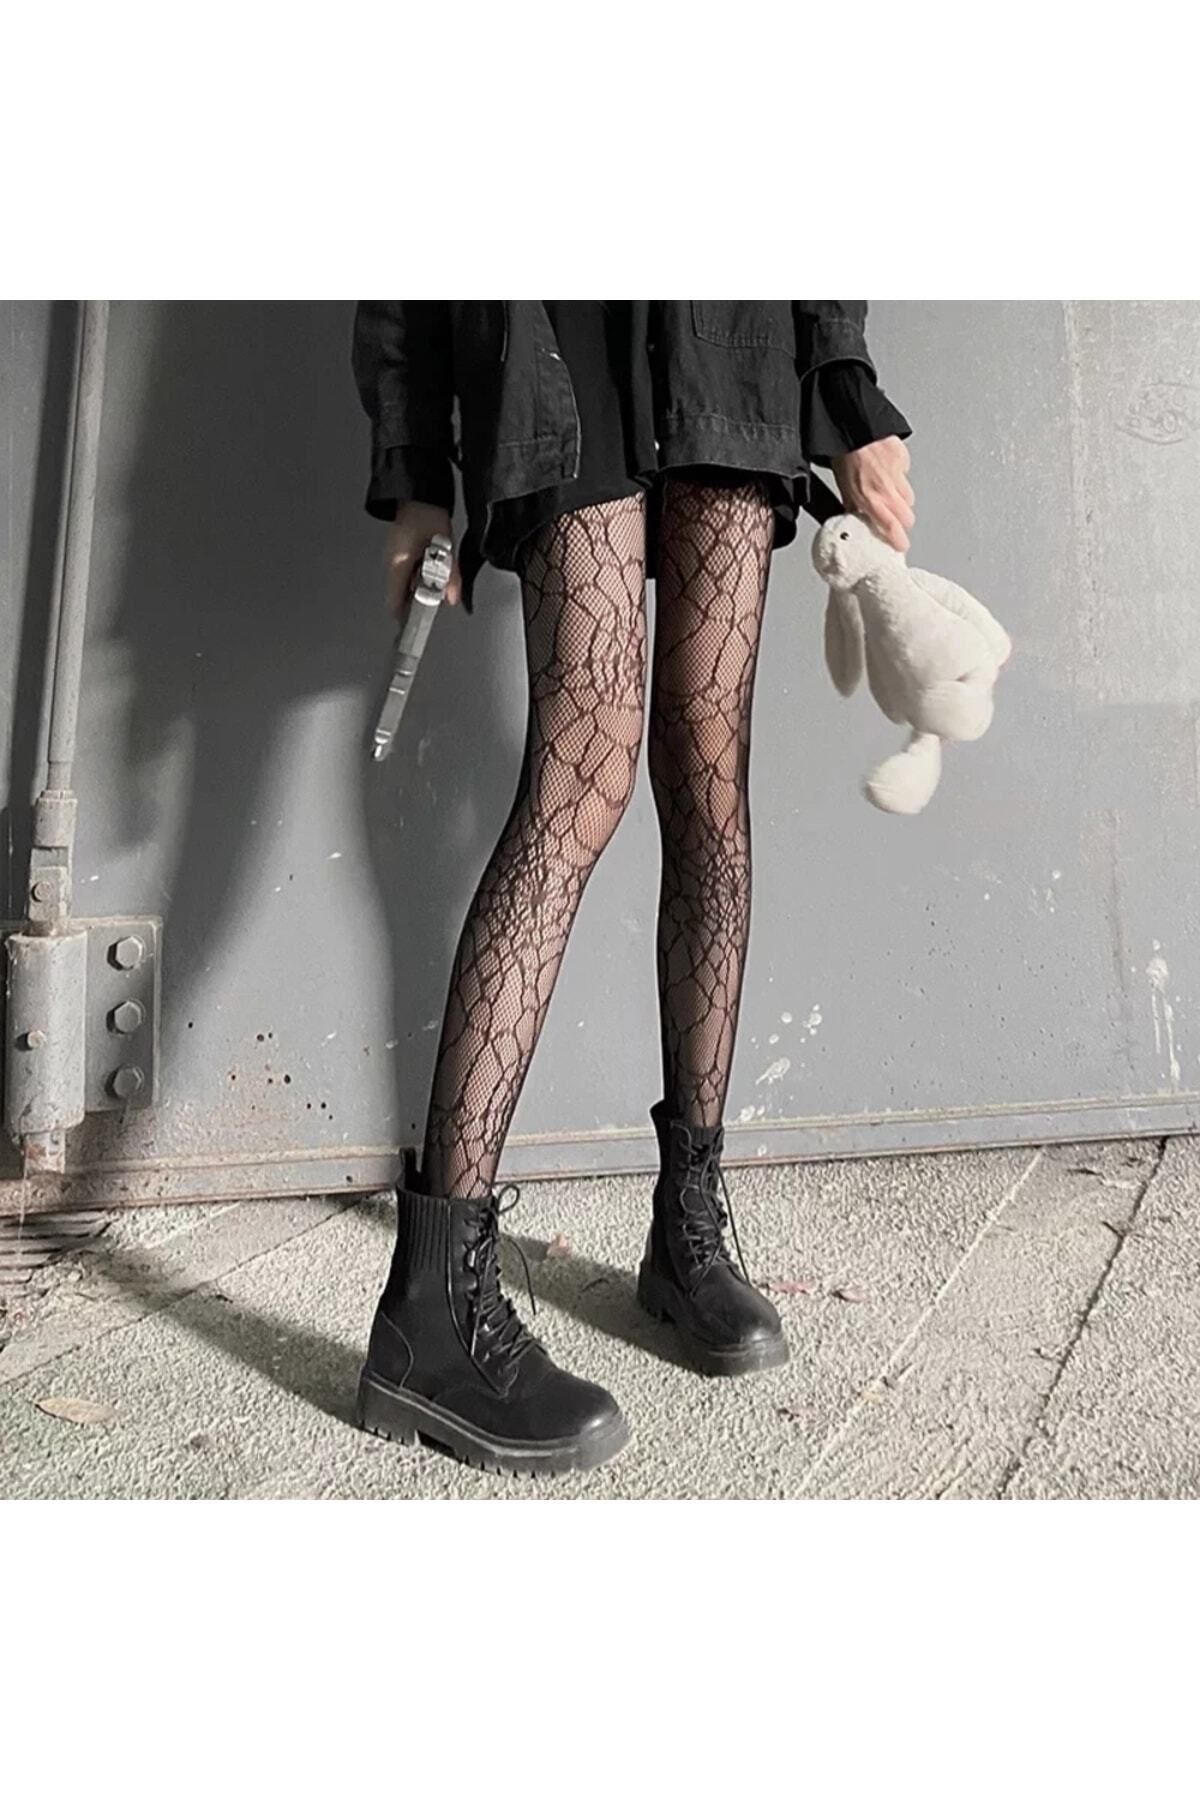 VEGAROKS Punk Gothic Lolita Punk Örümcek Ağ Desenli Ithal Külotlu Çorap